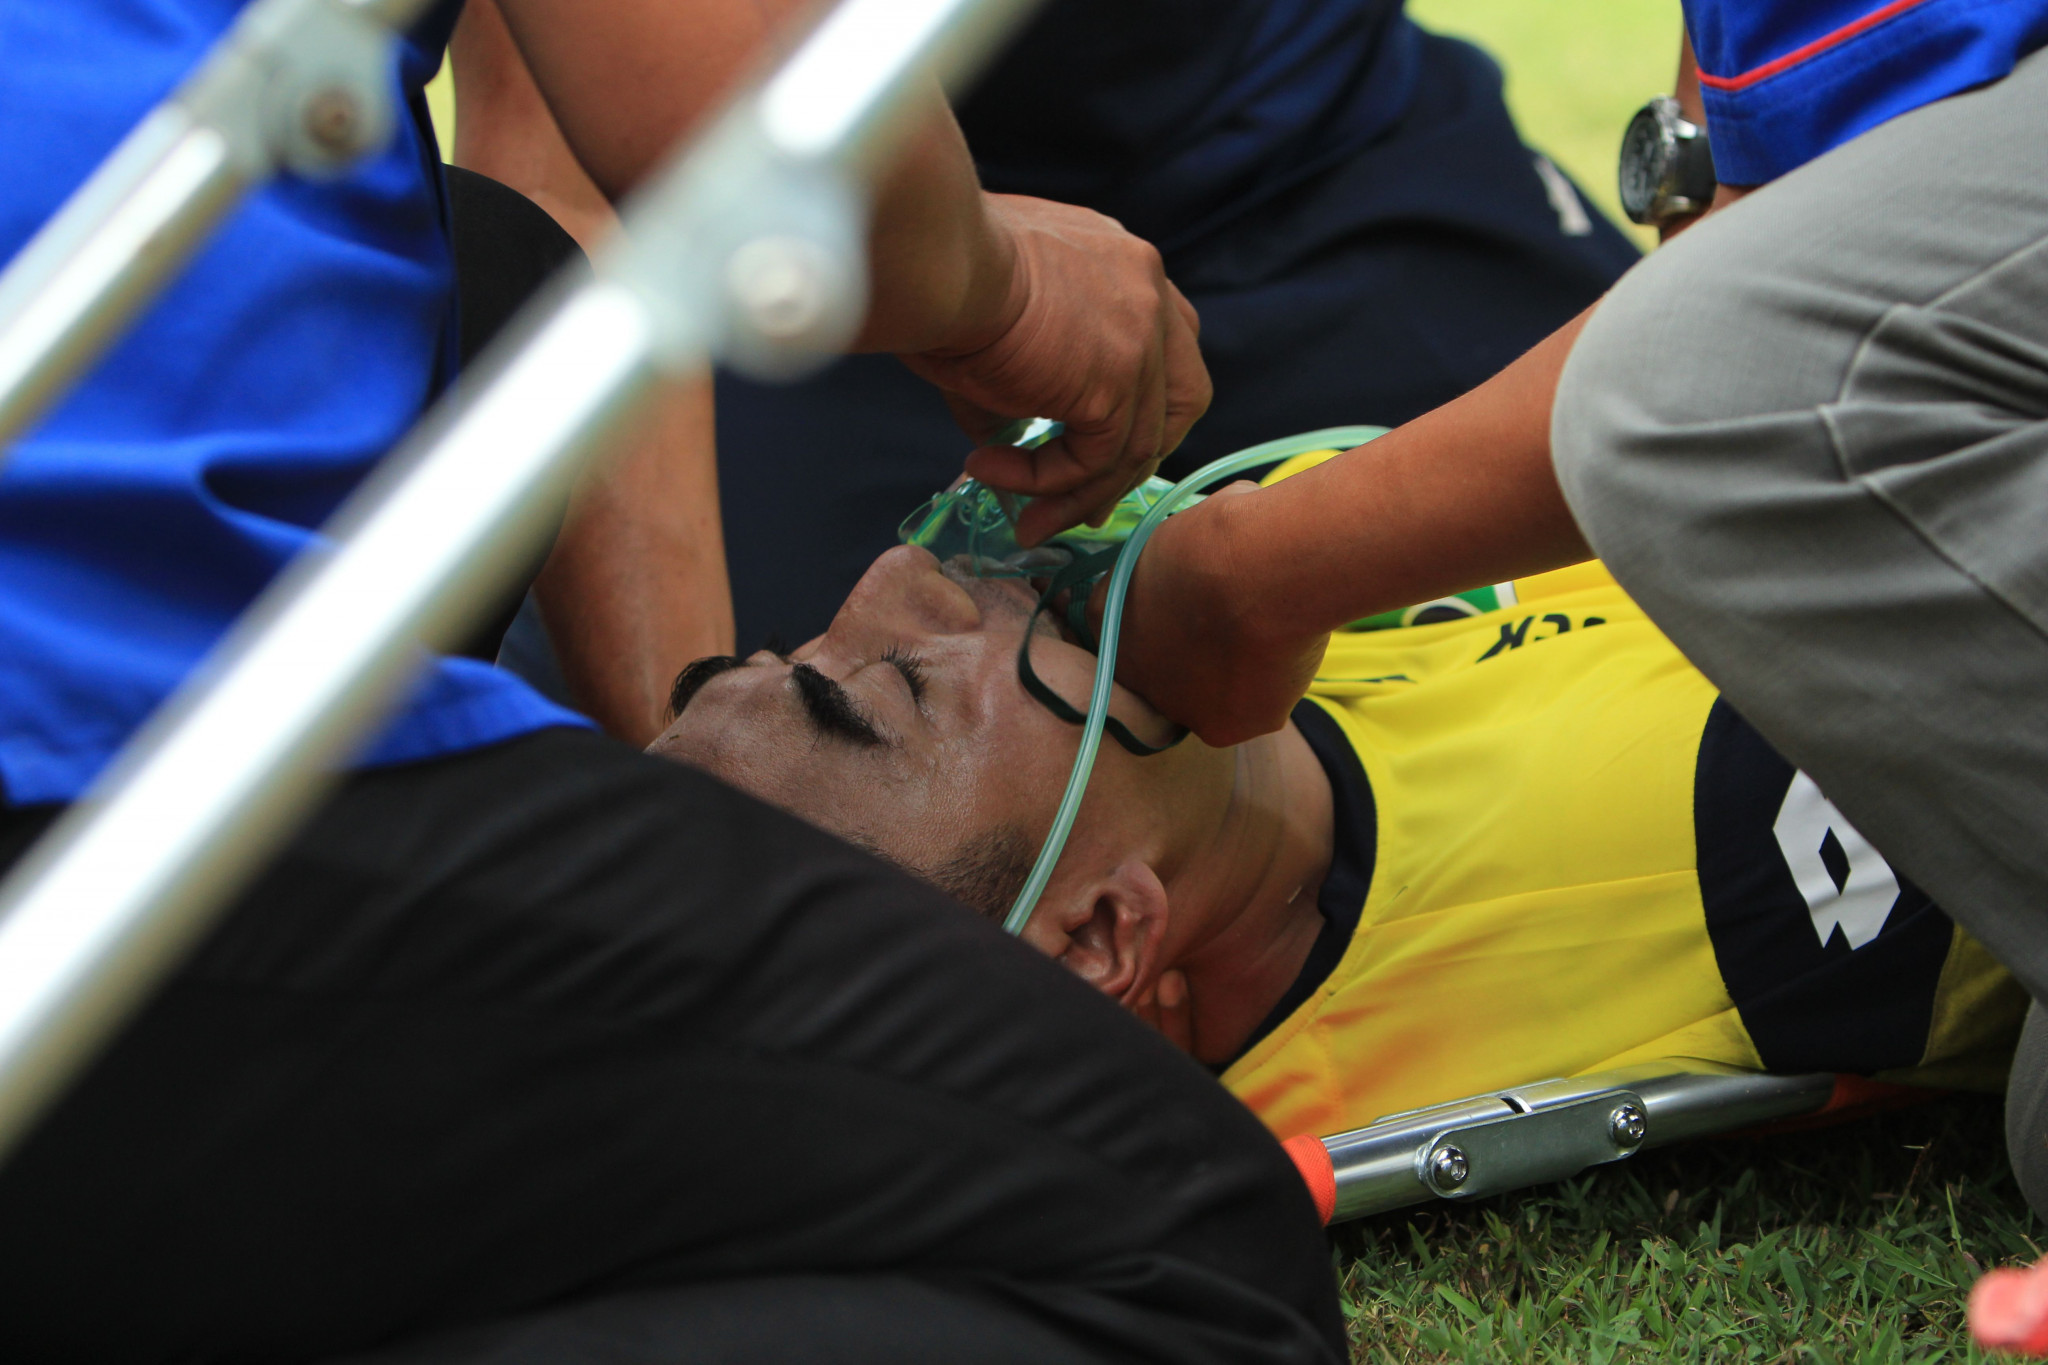 Indonesian goalkeeper dies following on-field clash